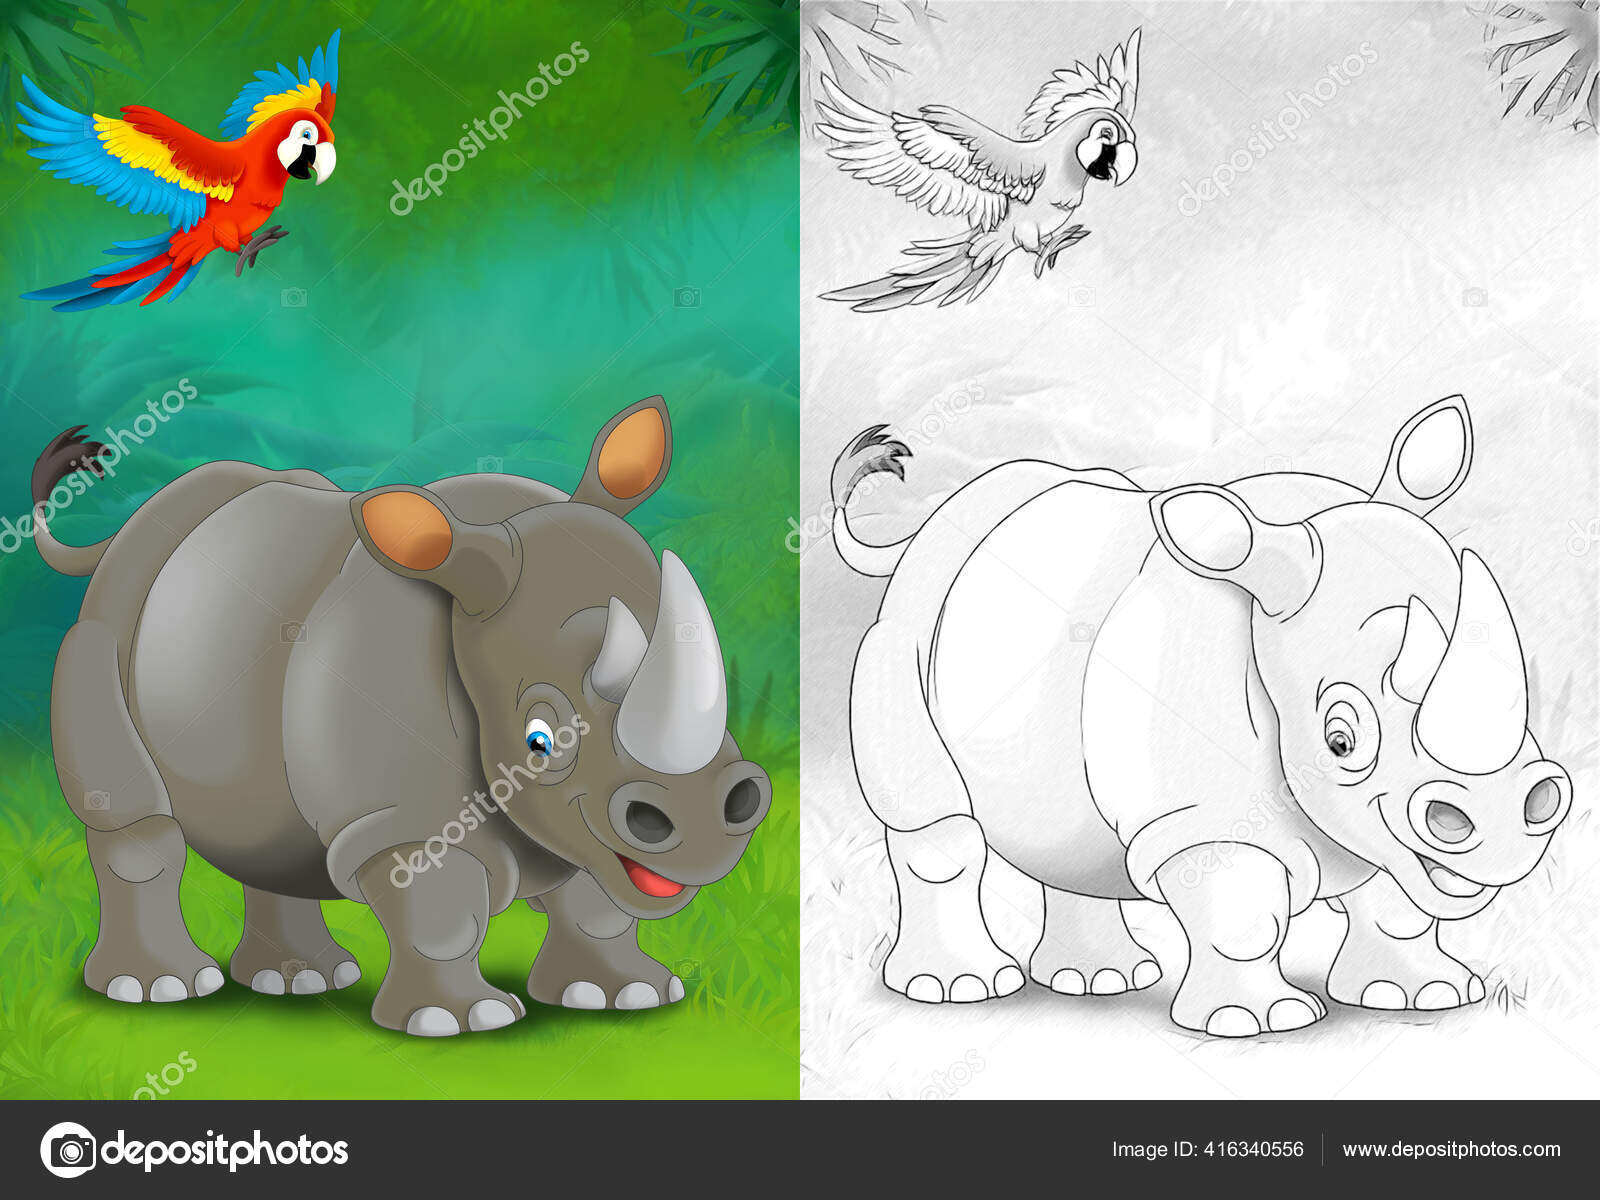 Cartoon Sketch Scene Rhino Rhinoceros Forest Illustration Children Stock  Photo by ©agaes8080 416340556